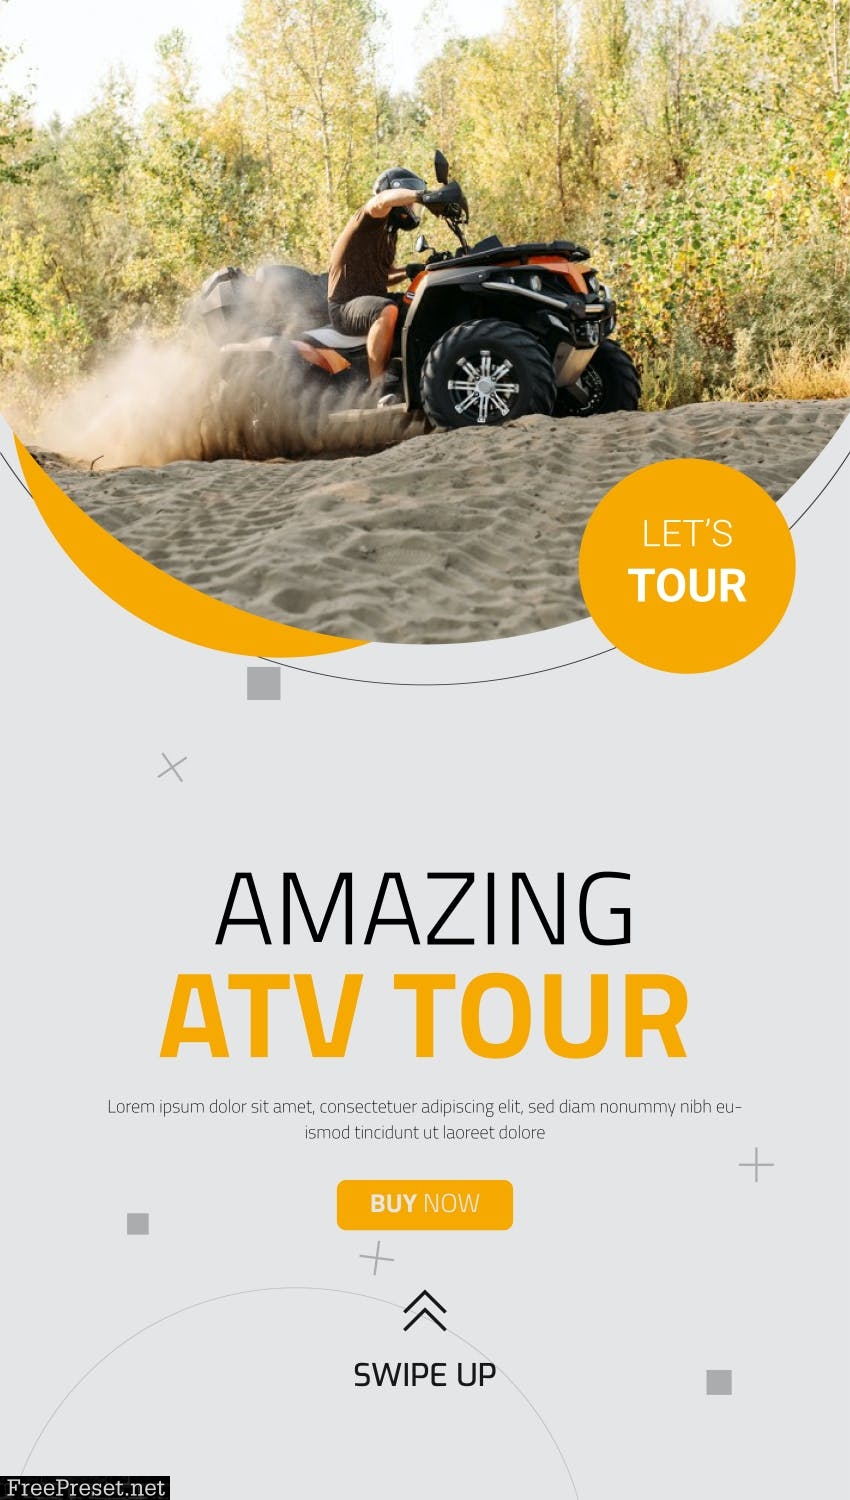 ATV Adventure Instagram Story